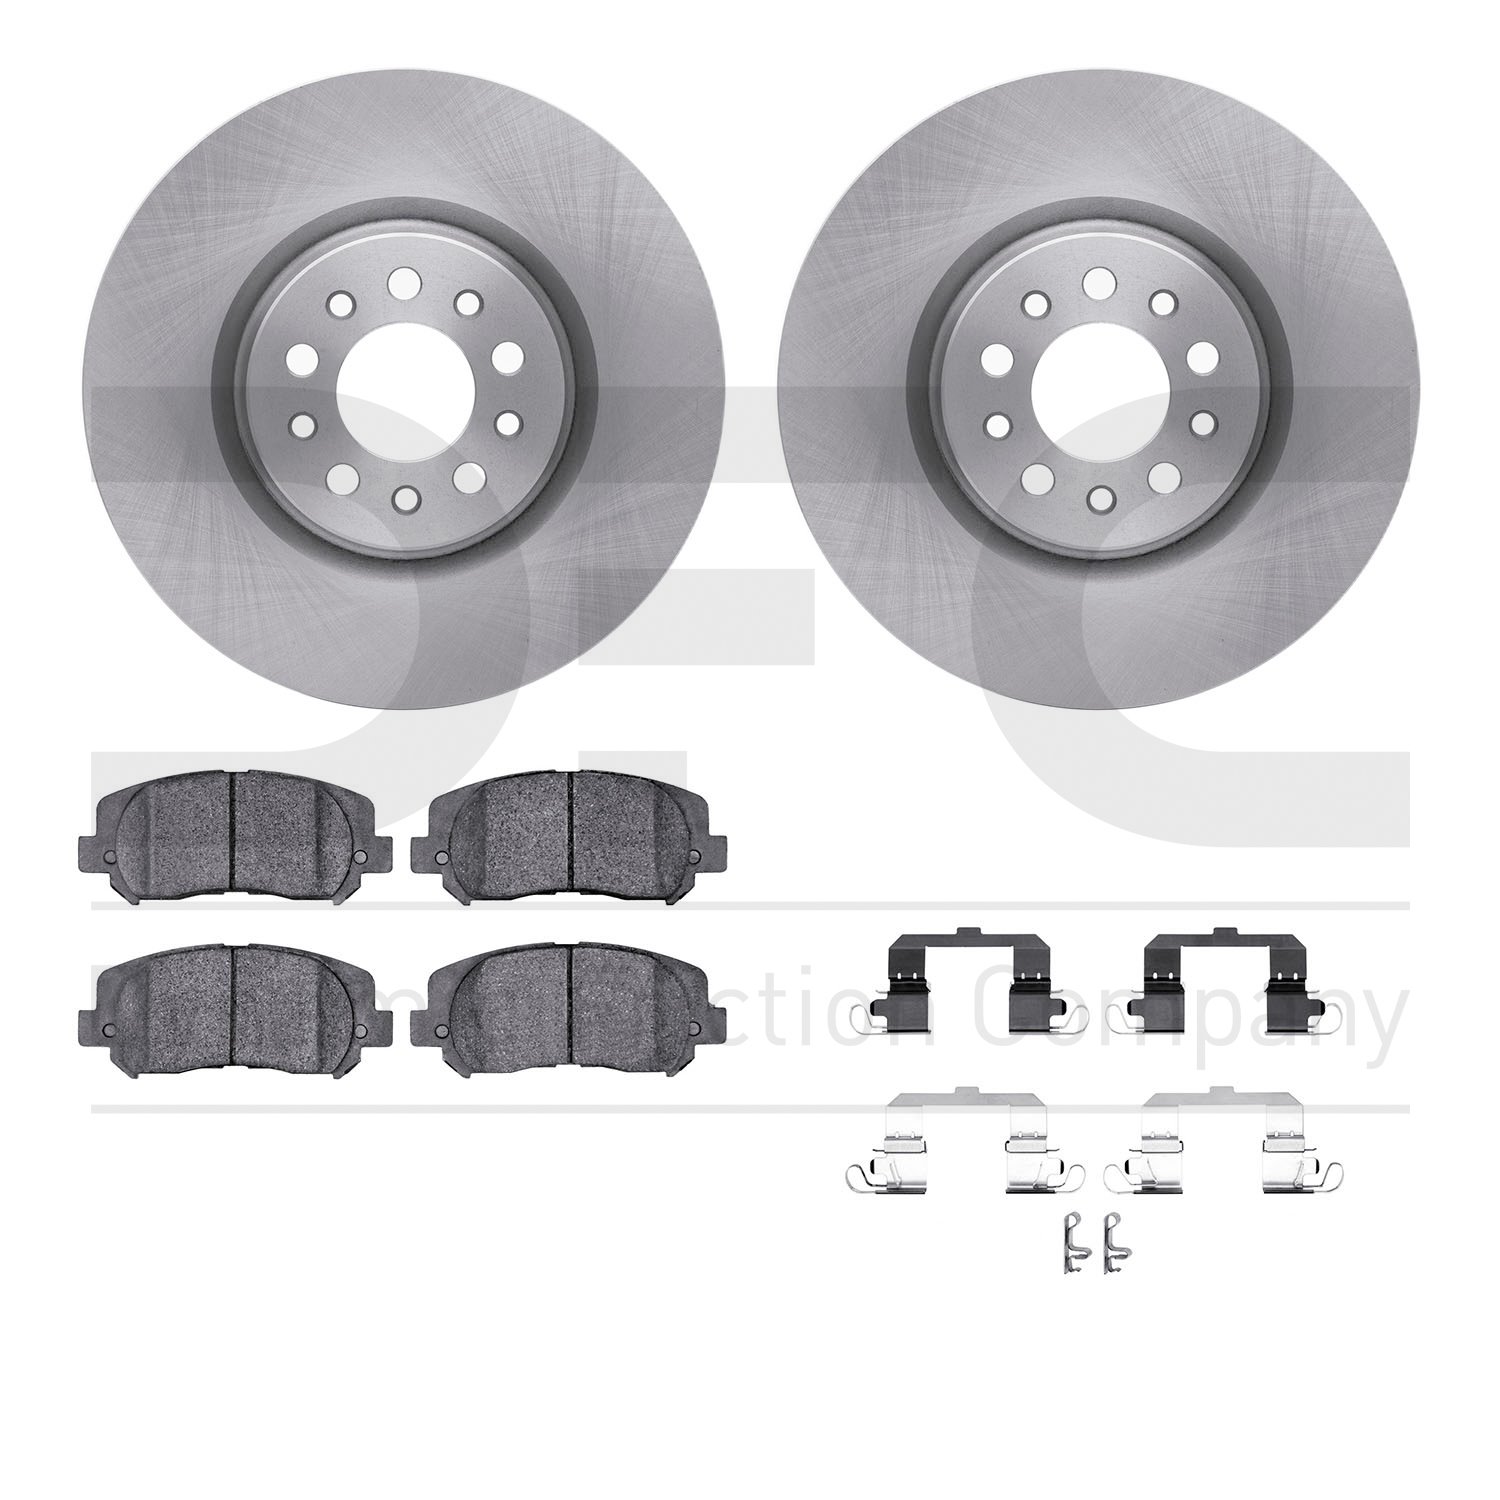 6412-42043 Brake Rotors with Ultimate-Duty Brake Pads Kit & Hardware, Fits Select Mopar, Position: Front